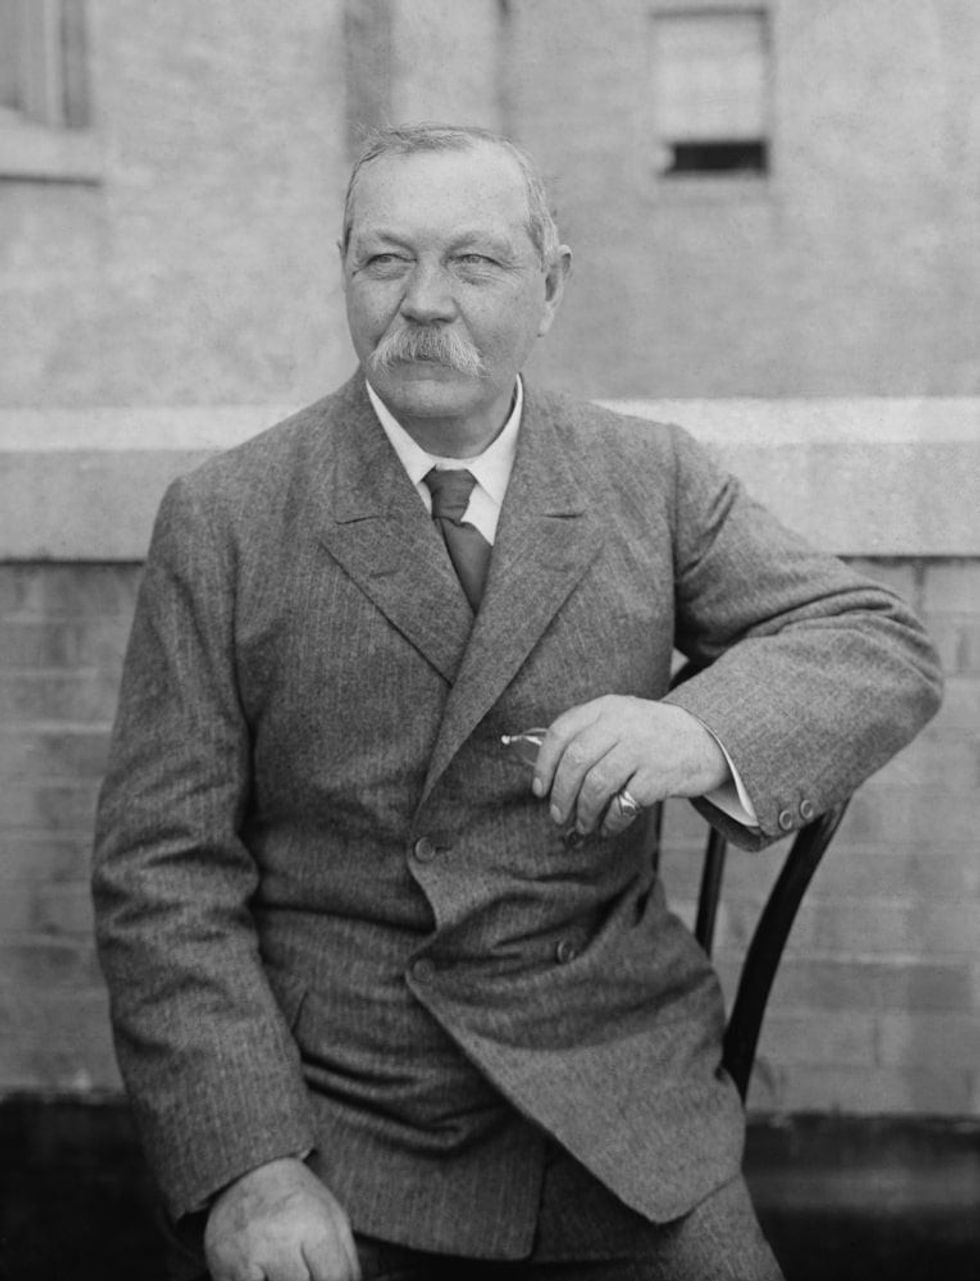 Arthur Conan Doyle, a Scotch-Irish writer created the fictional detective Sherlock Holmes